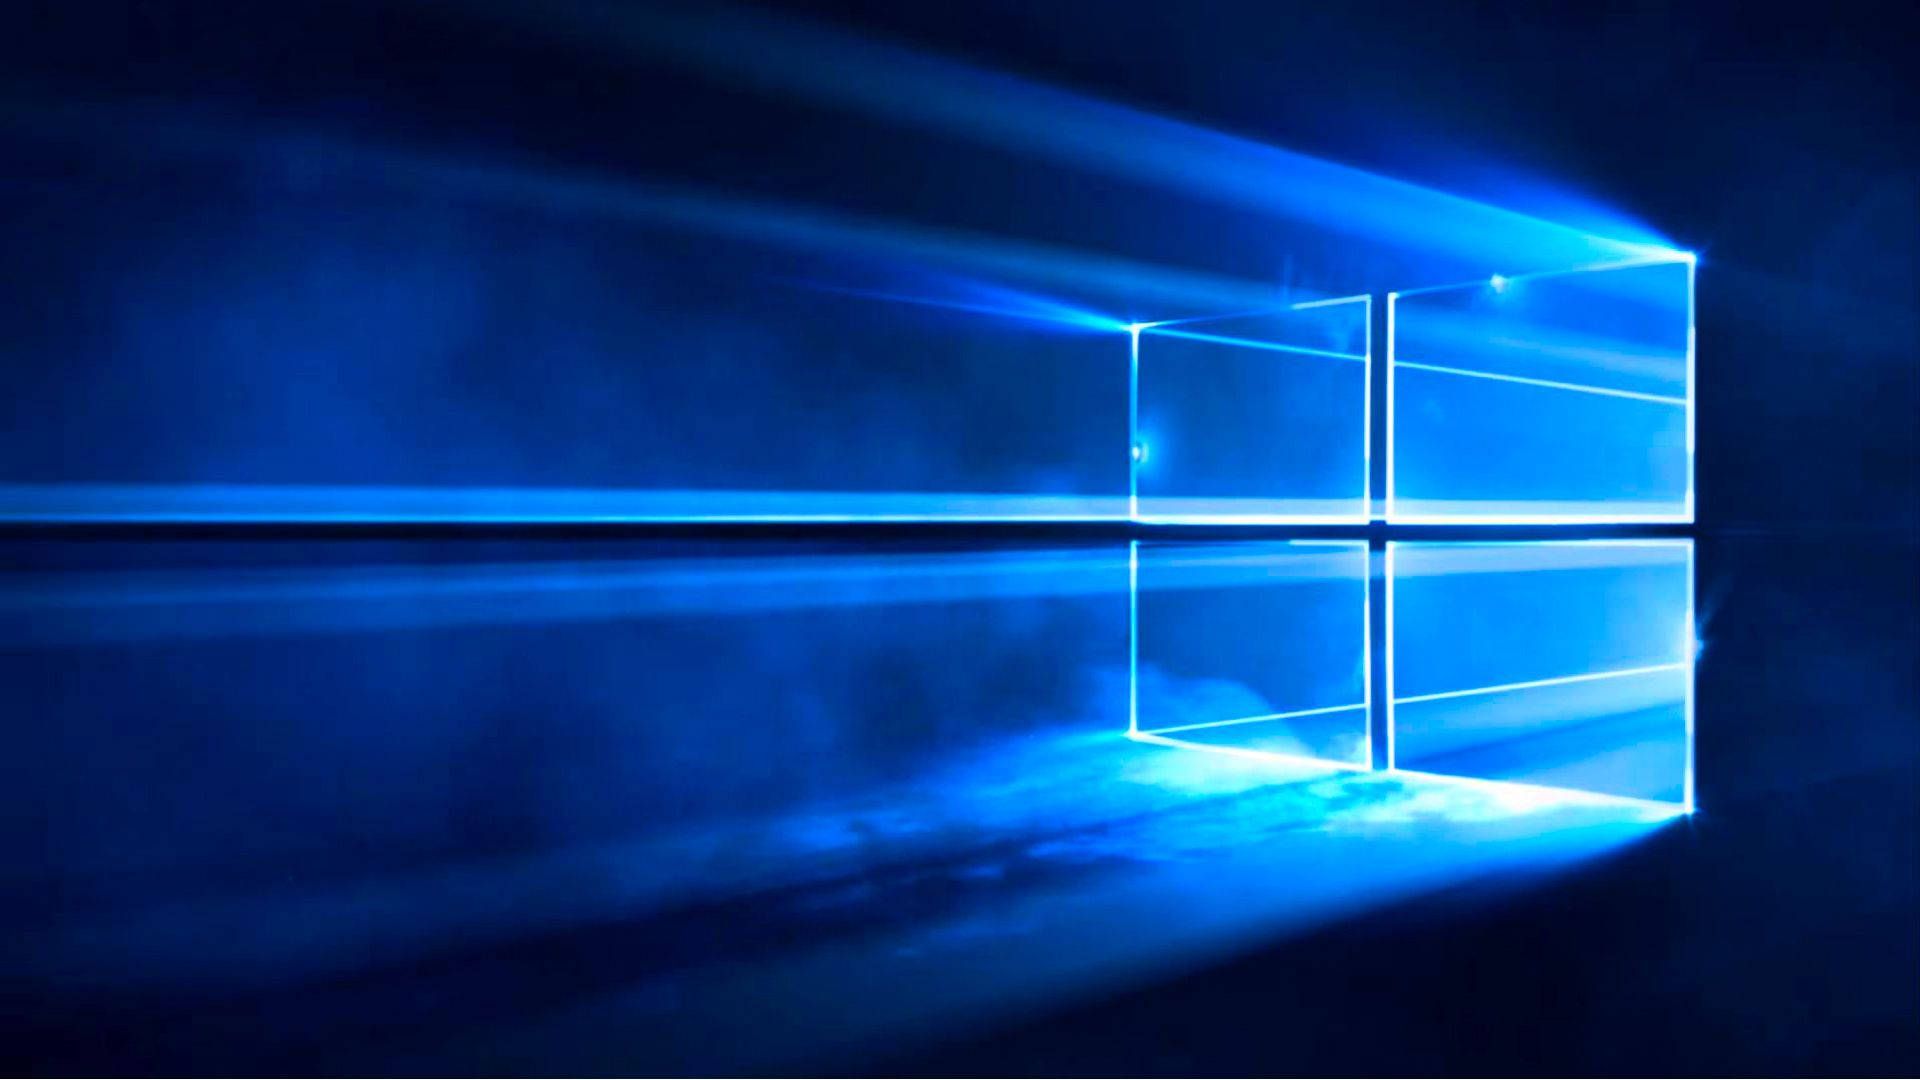 Windows 10 wallpaper with the blue light - Windows 10